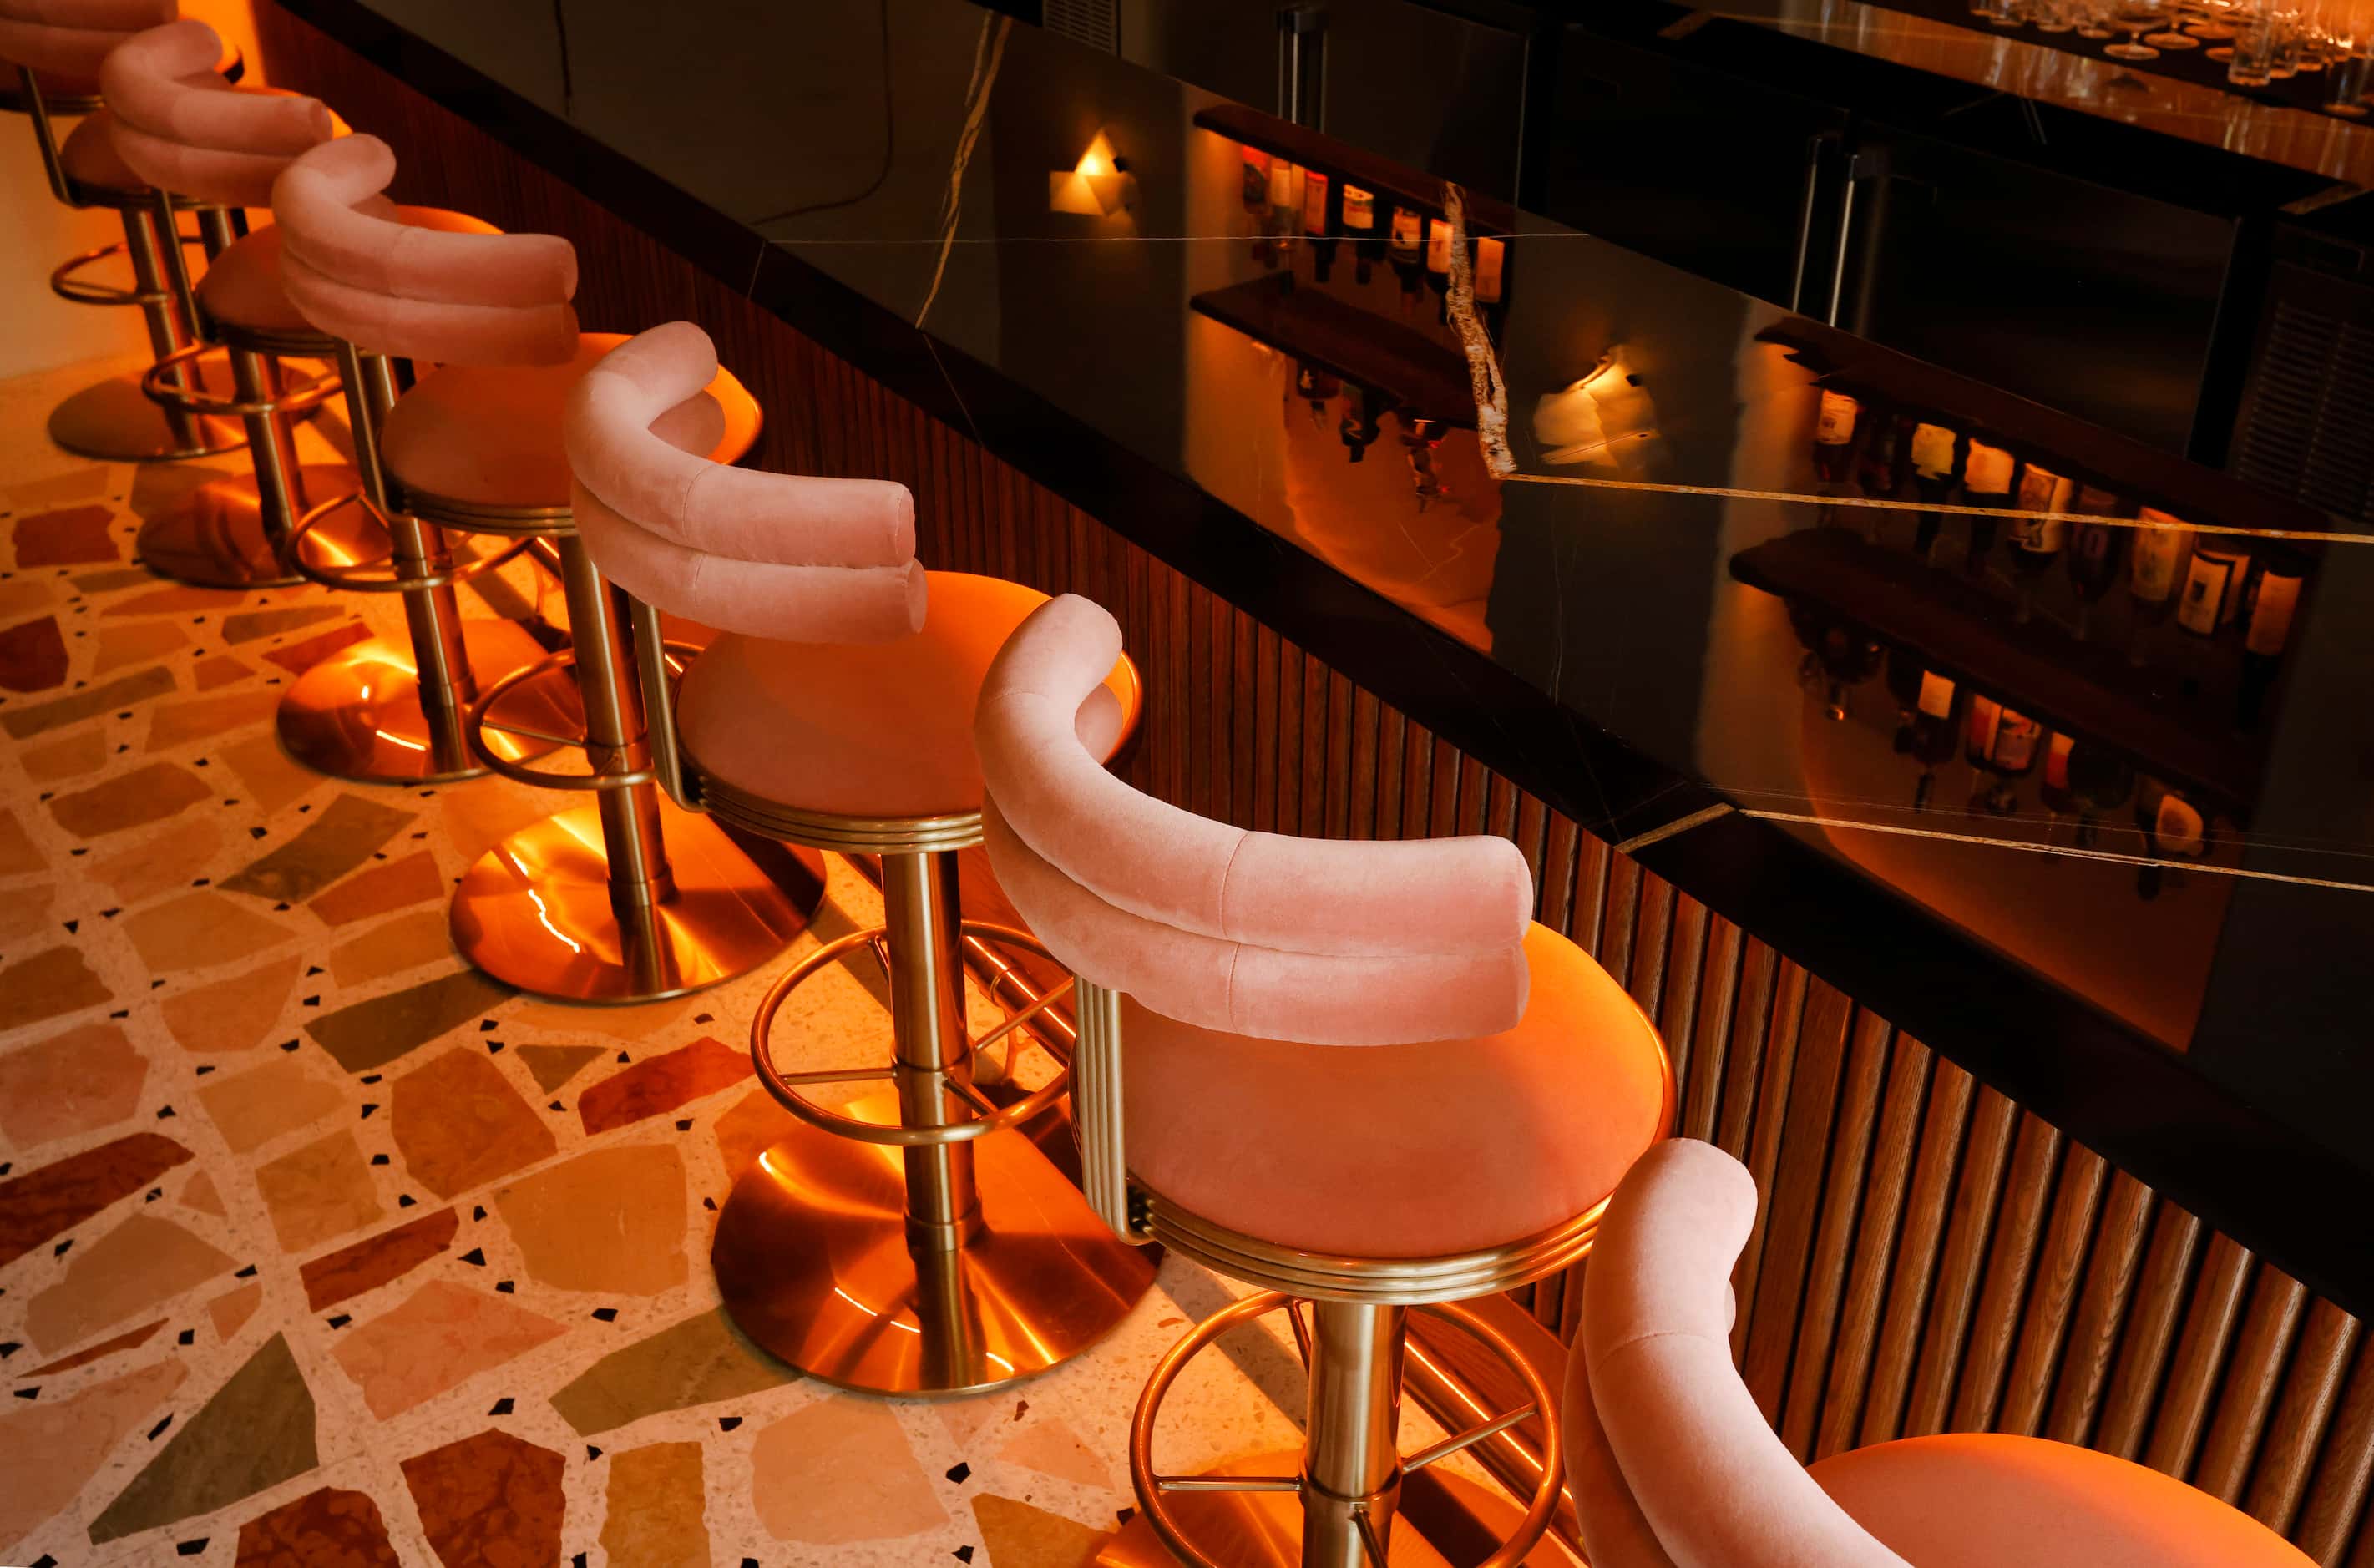 An interior view of Bar Colette in Dallas